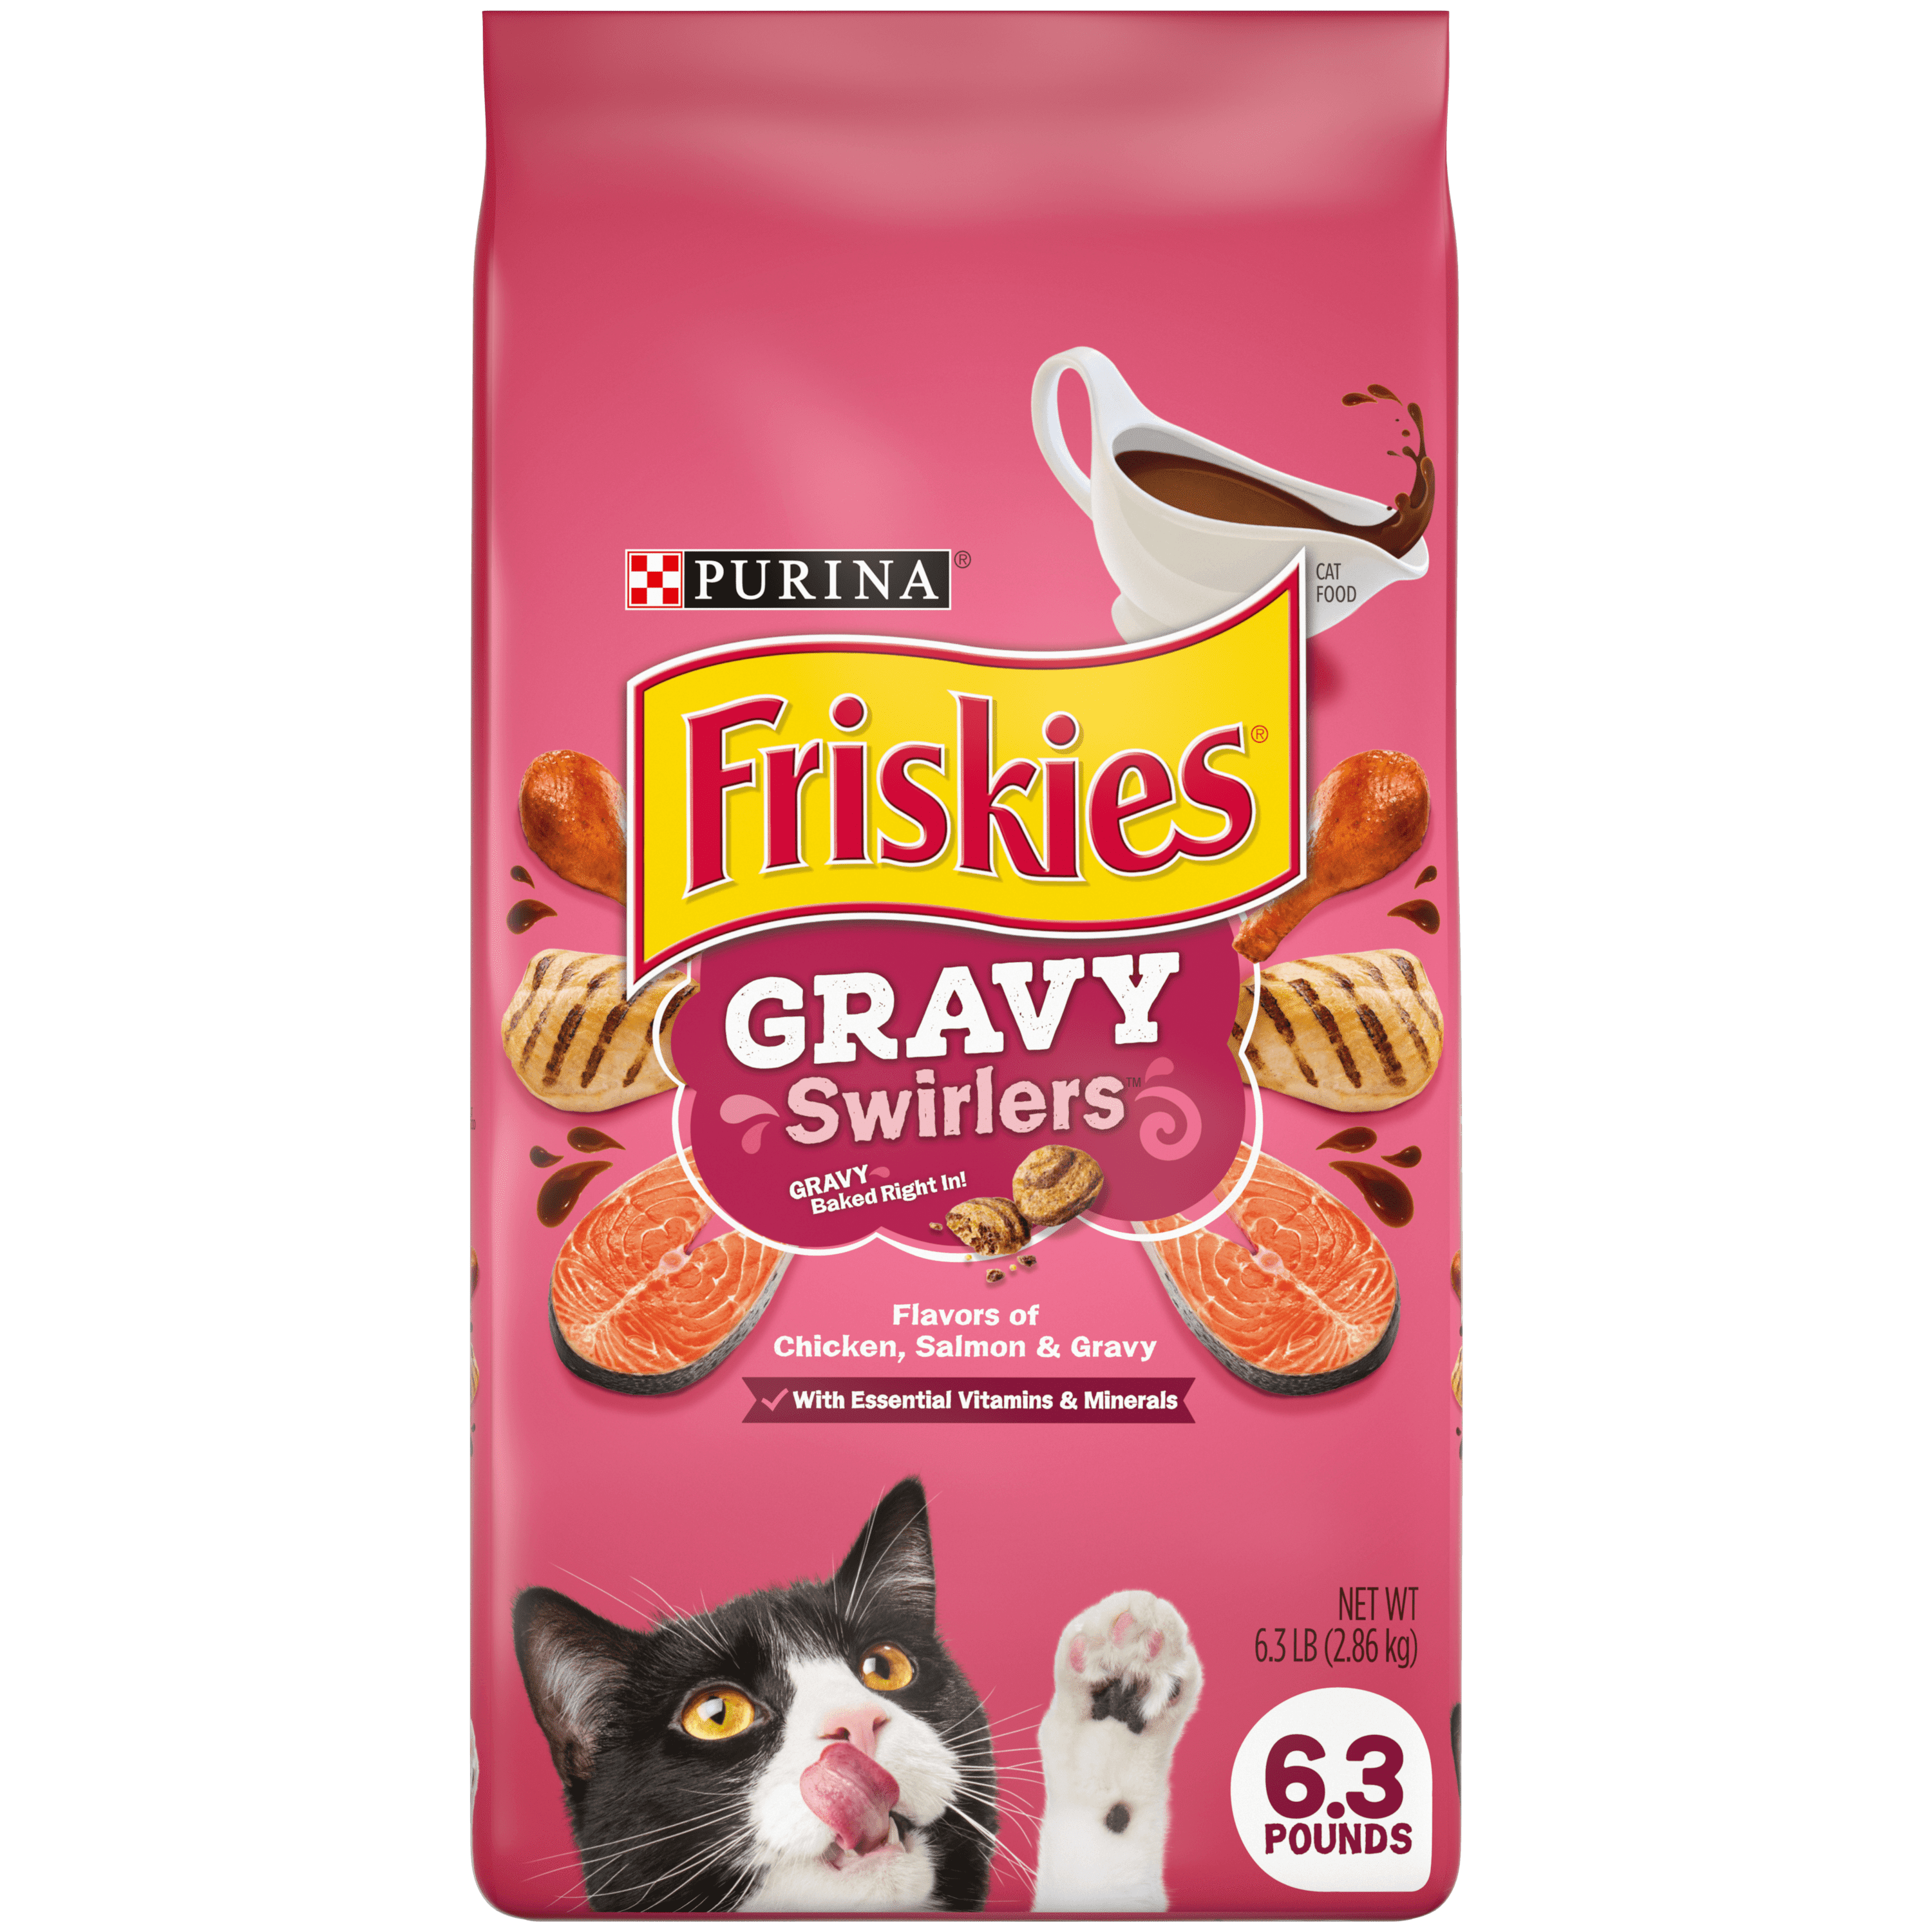 Friskies Dry Cat Food, Gravy Swirlers, 6.3 lb. Bag